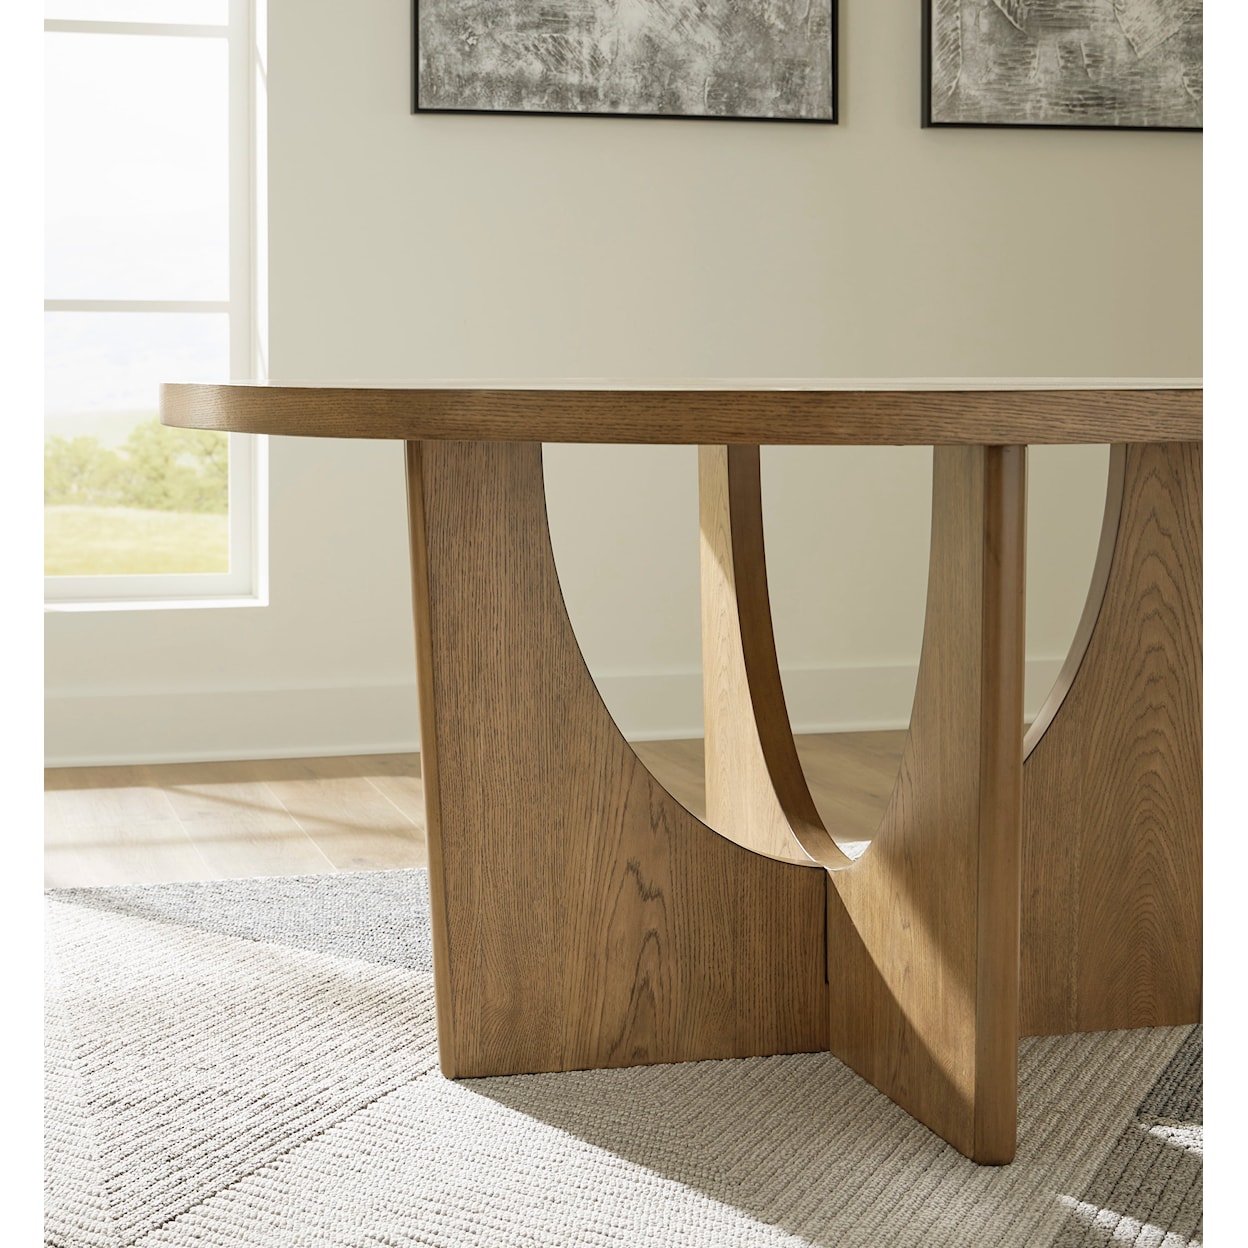 Ashley Furniture Signature Design Dakmore 5-Piece Dining Set